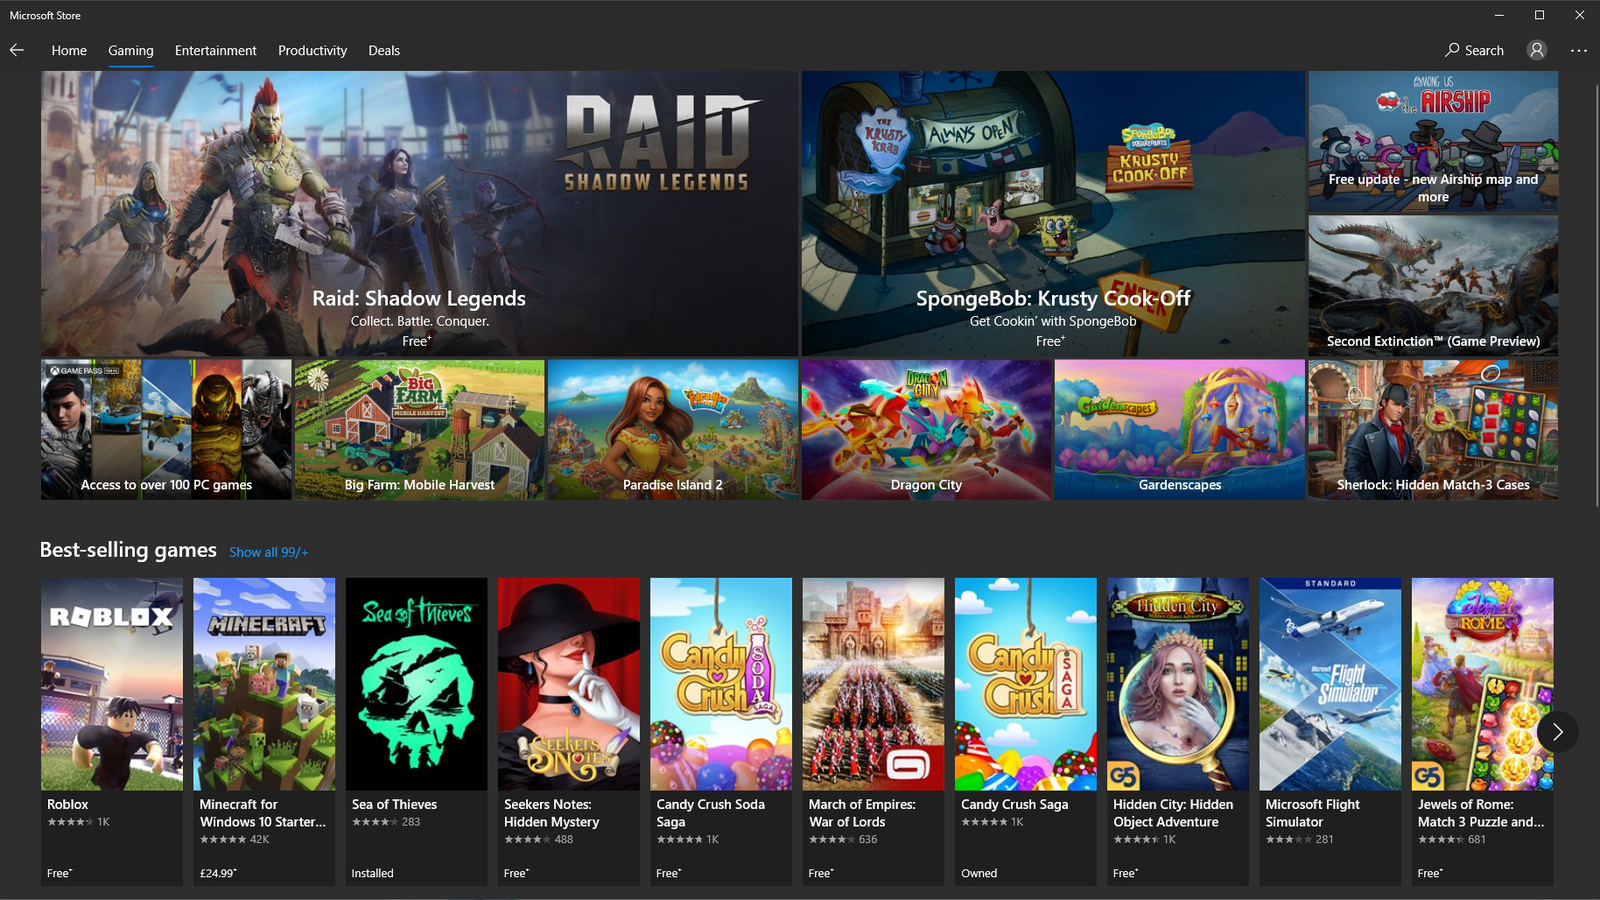 Top free games - Microsoft Store